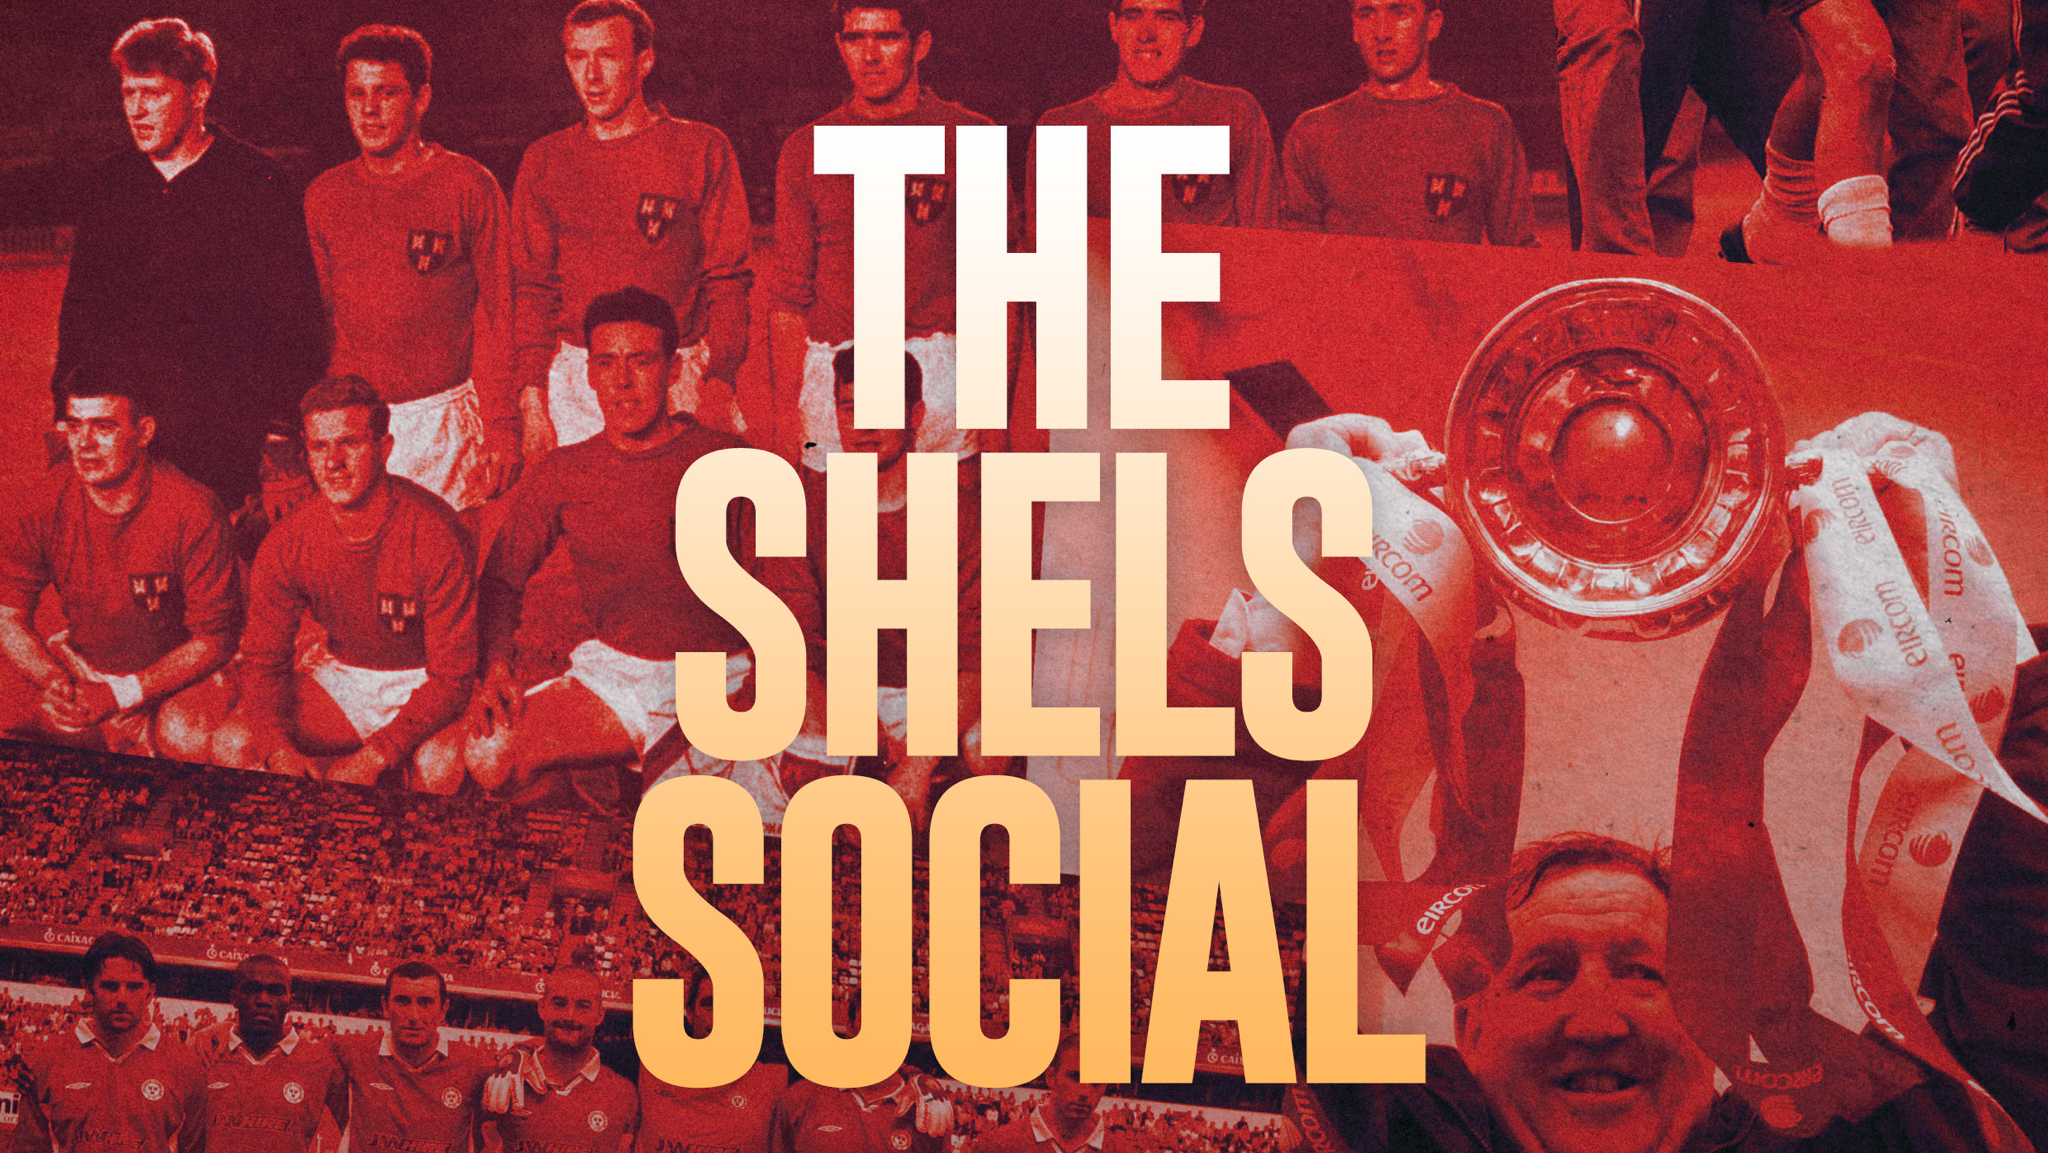 The Shels Social – Celebrating 125 years